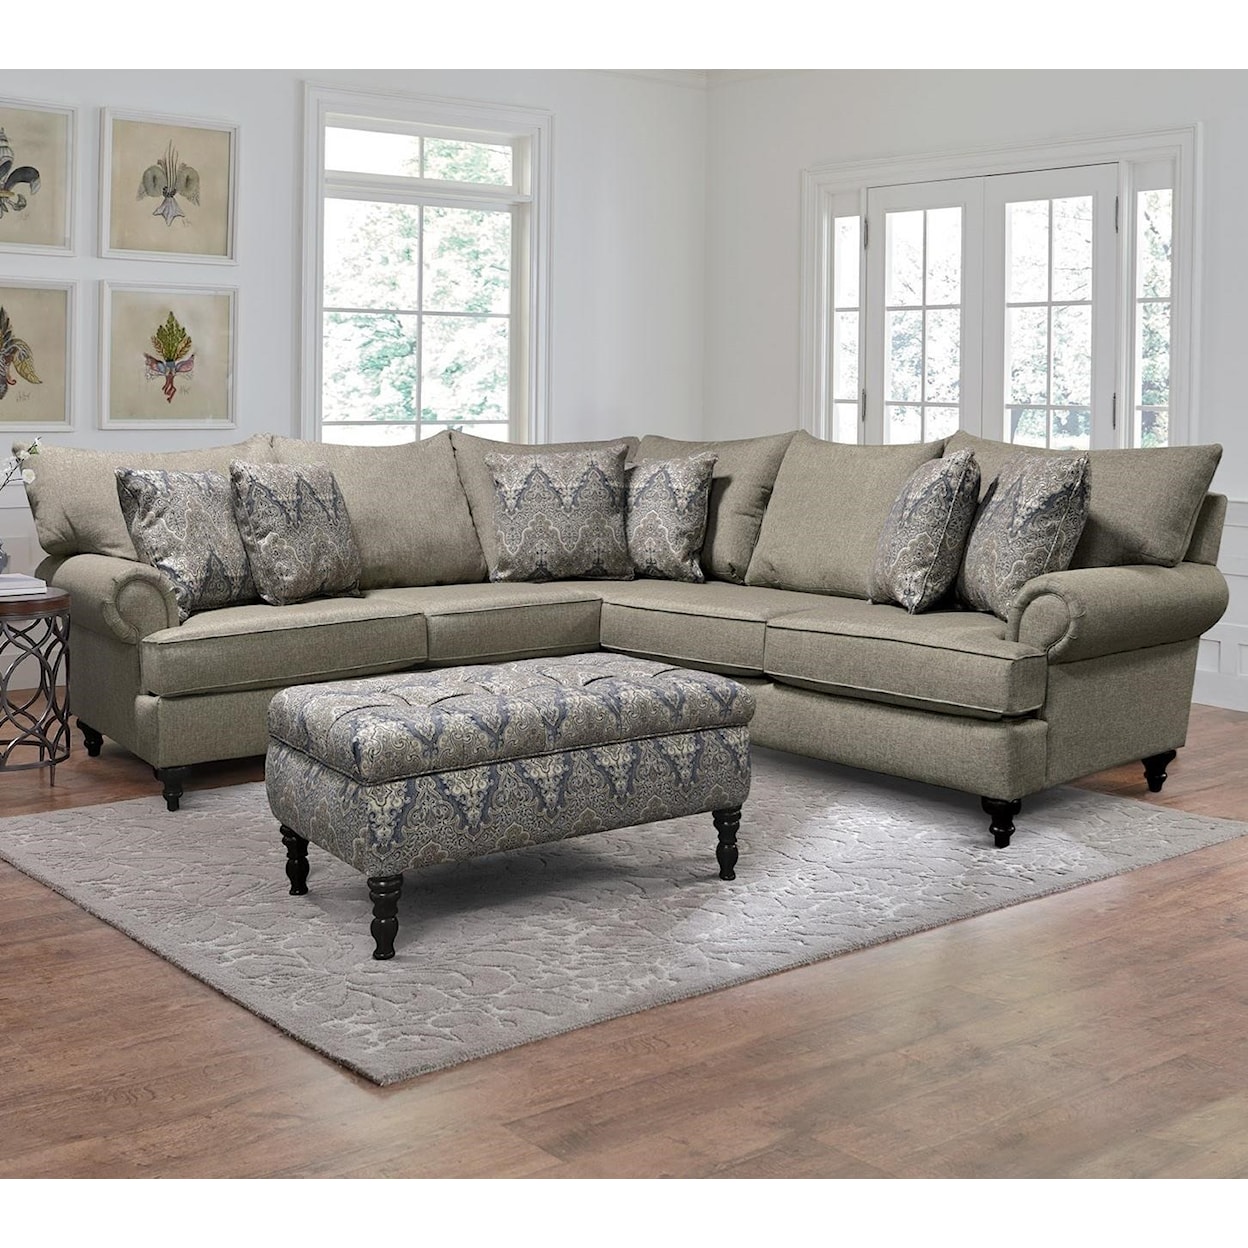 Dimensions 4Y00/N Series Sectional Sofa